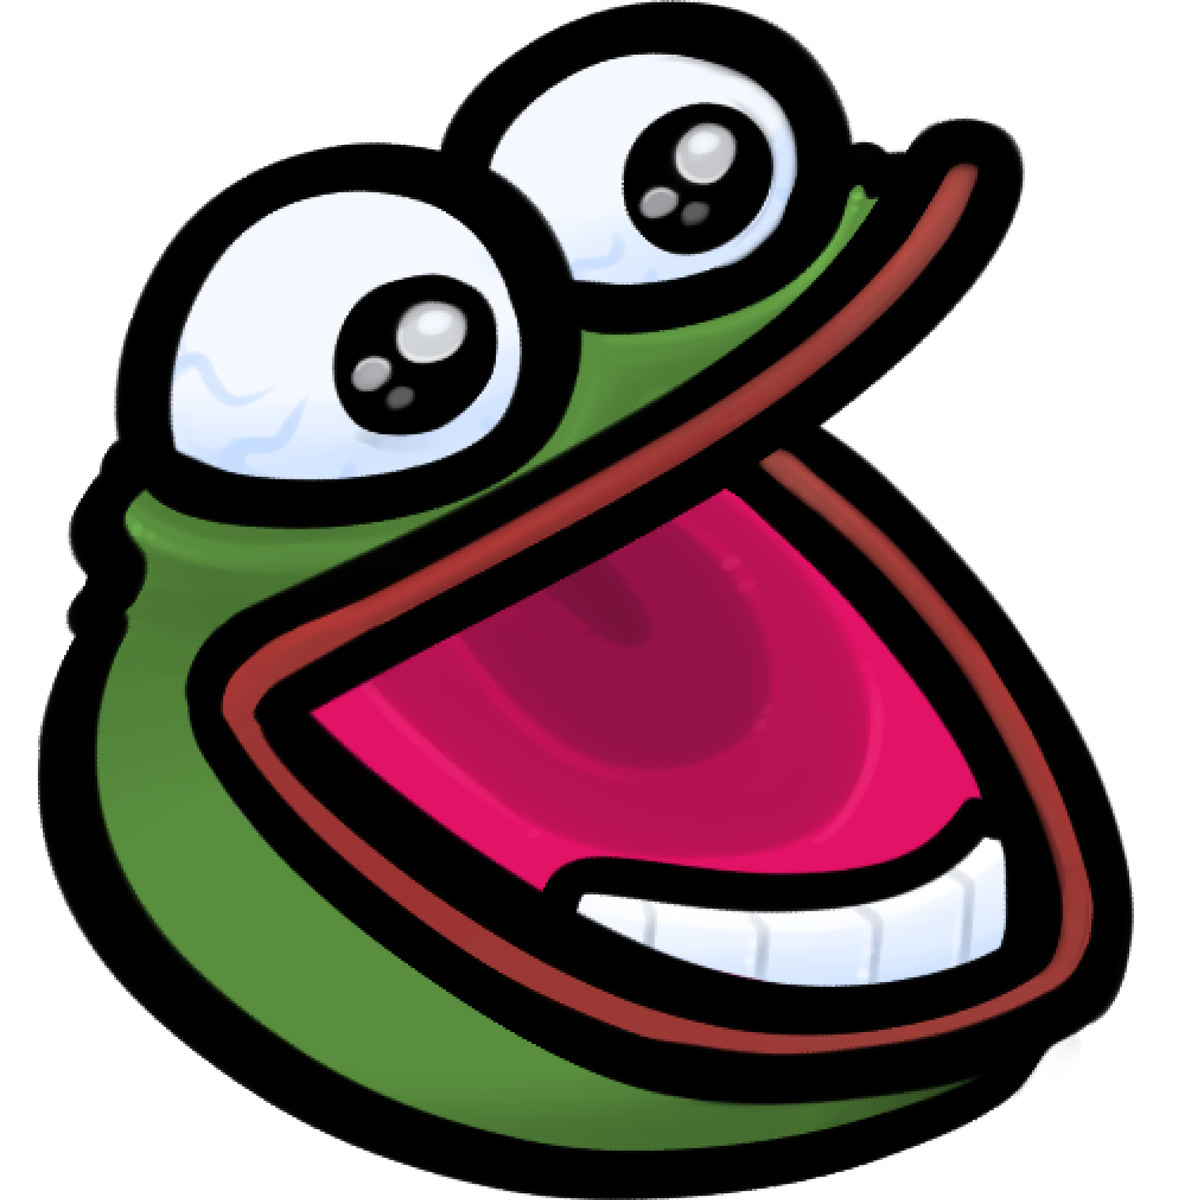 Download Pepe Emote Frog Amphibian The Twitch HQ PNG Image FreePNGImg